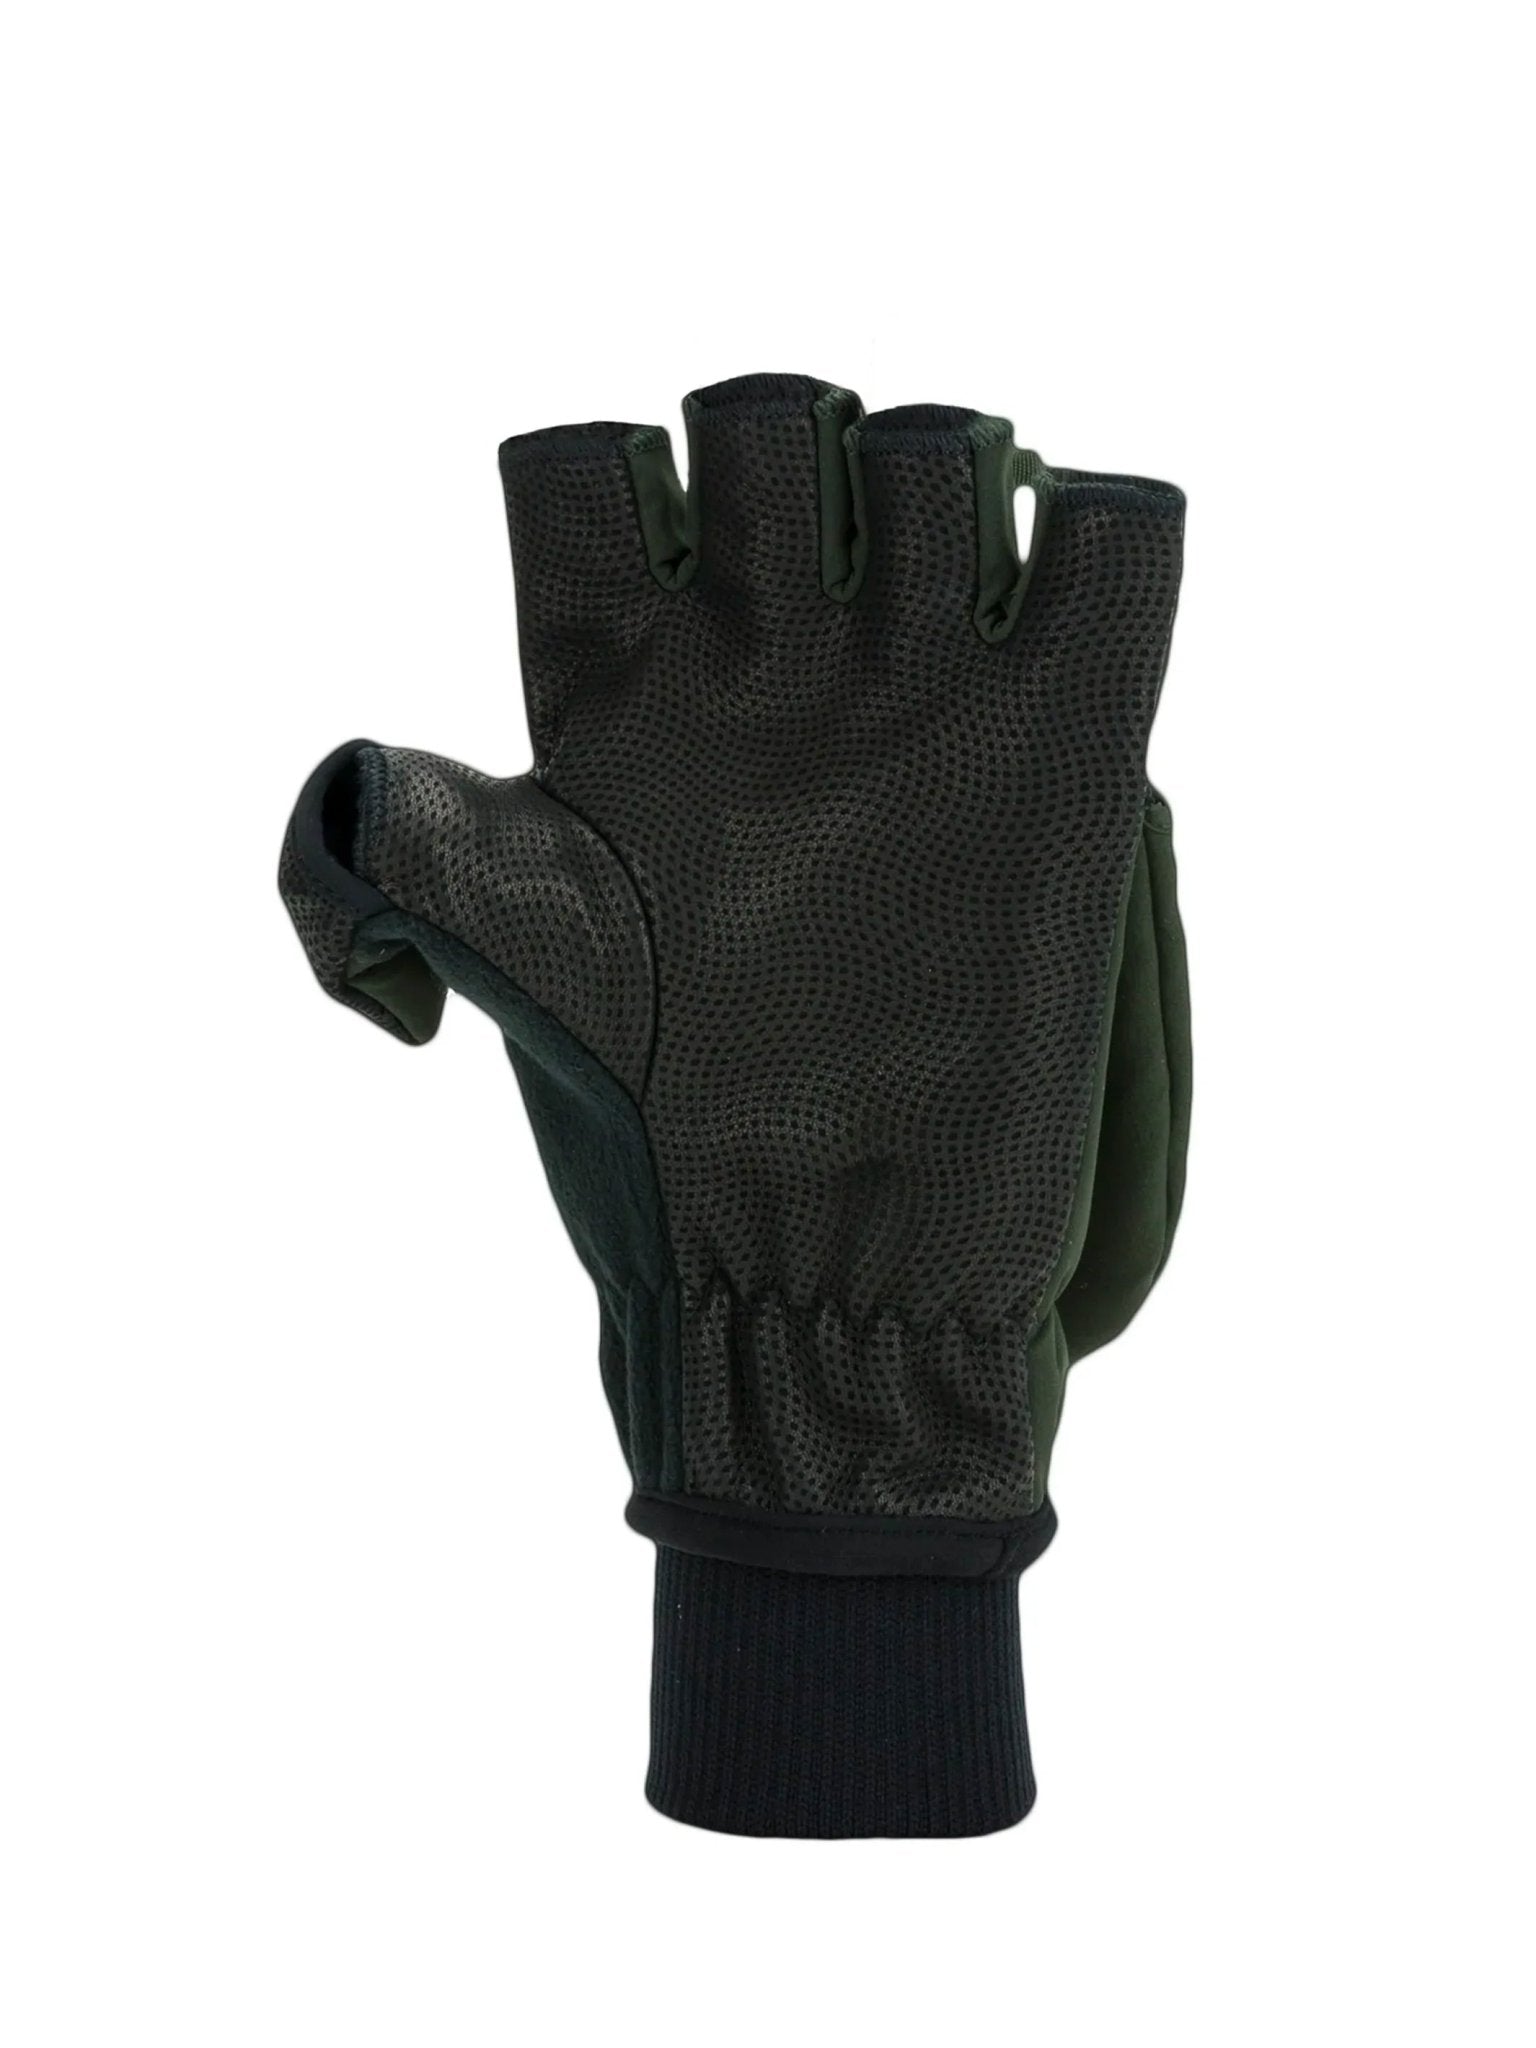 4elementsclothingSealSkinzSealSkinz - Windproof Gloves / Cold Weather Convertible Mitt / Glove - WarpoleGloves12100071001310